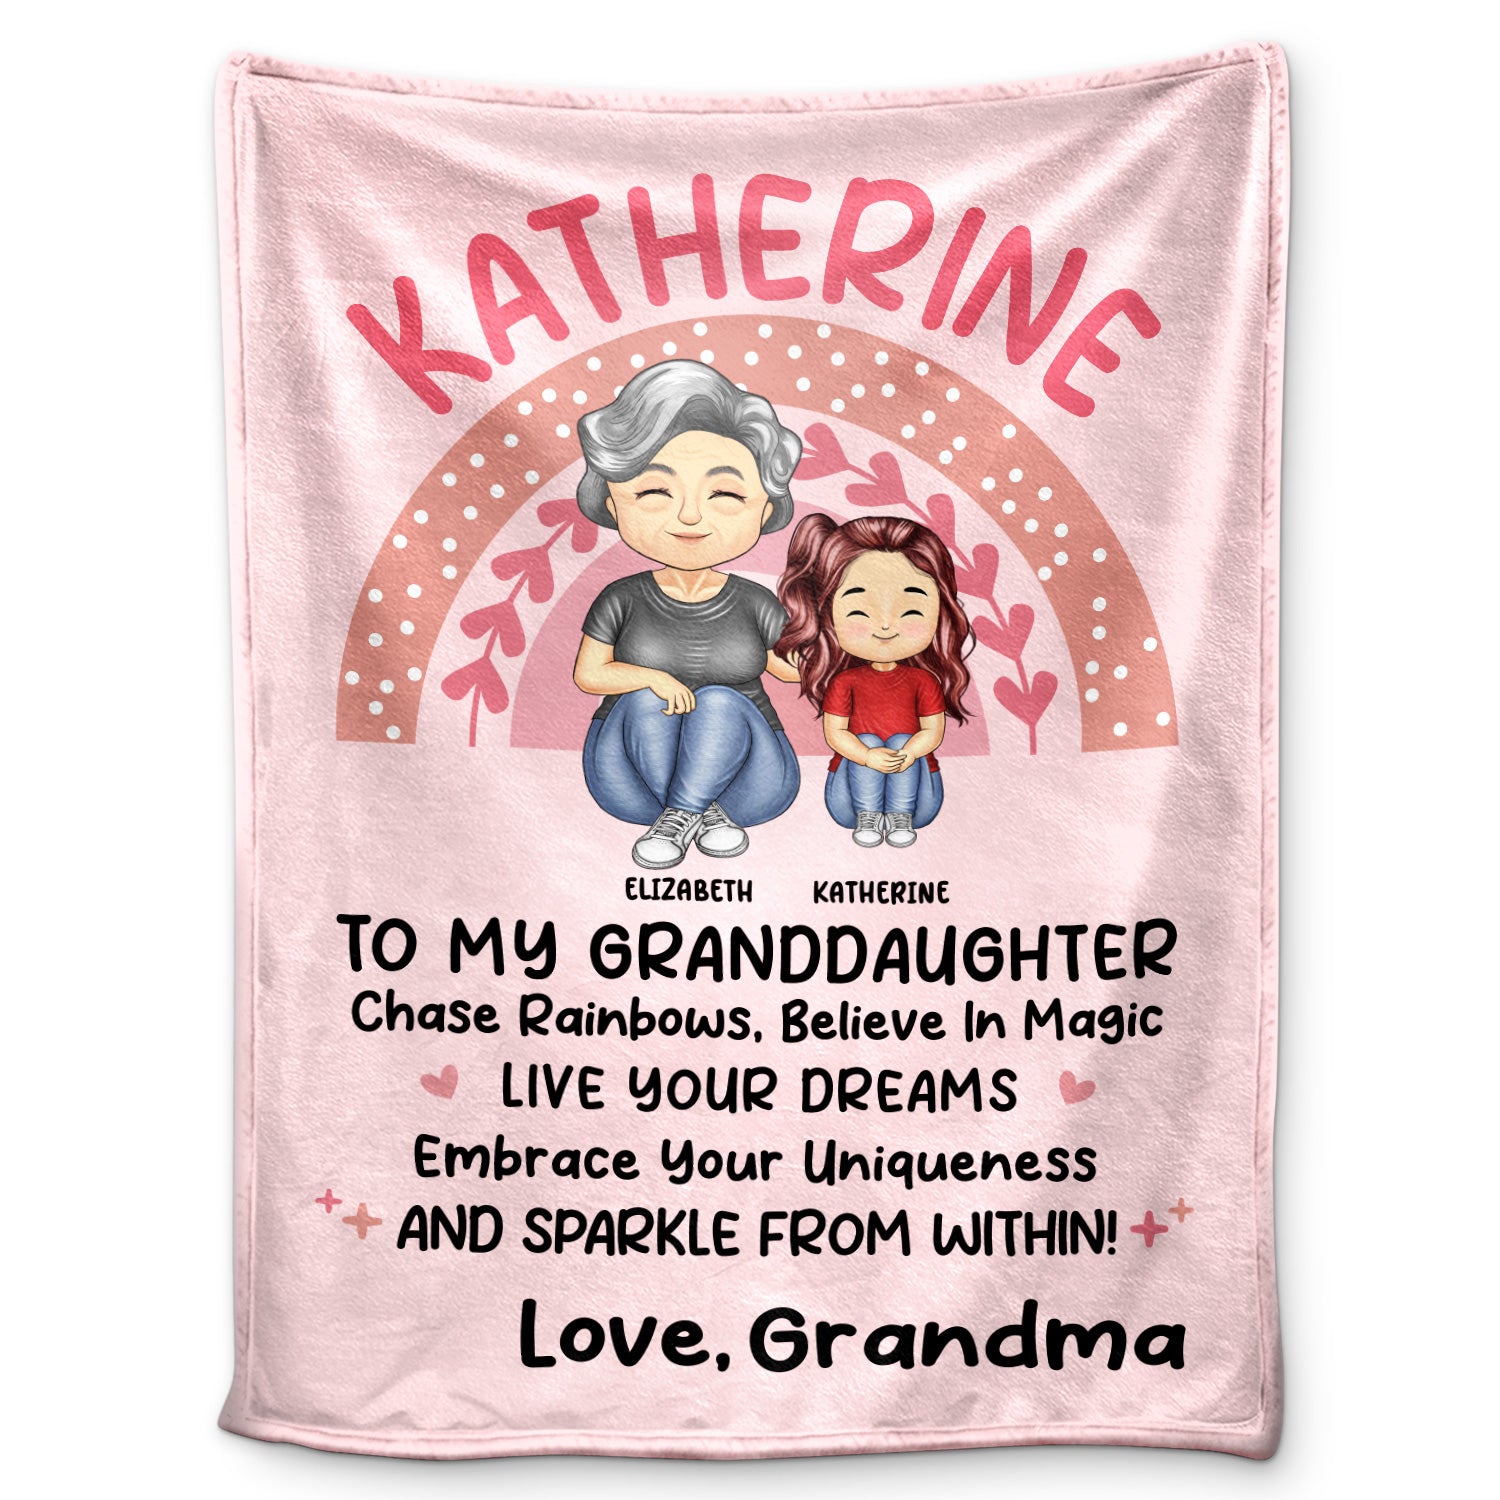 Grandma Granddaughter Grandson Chase Your Rainbows - Gift For Grandkids - Personalized Fleece Blanket, Sherpa Blanket